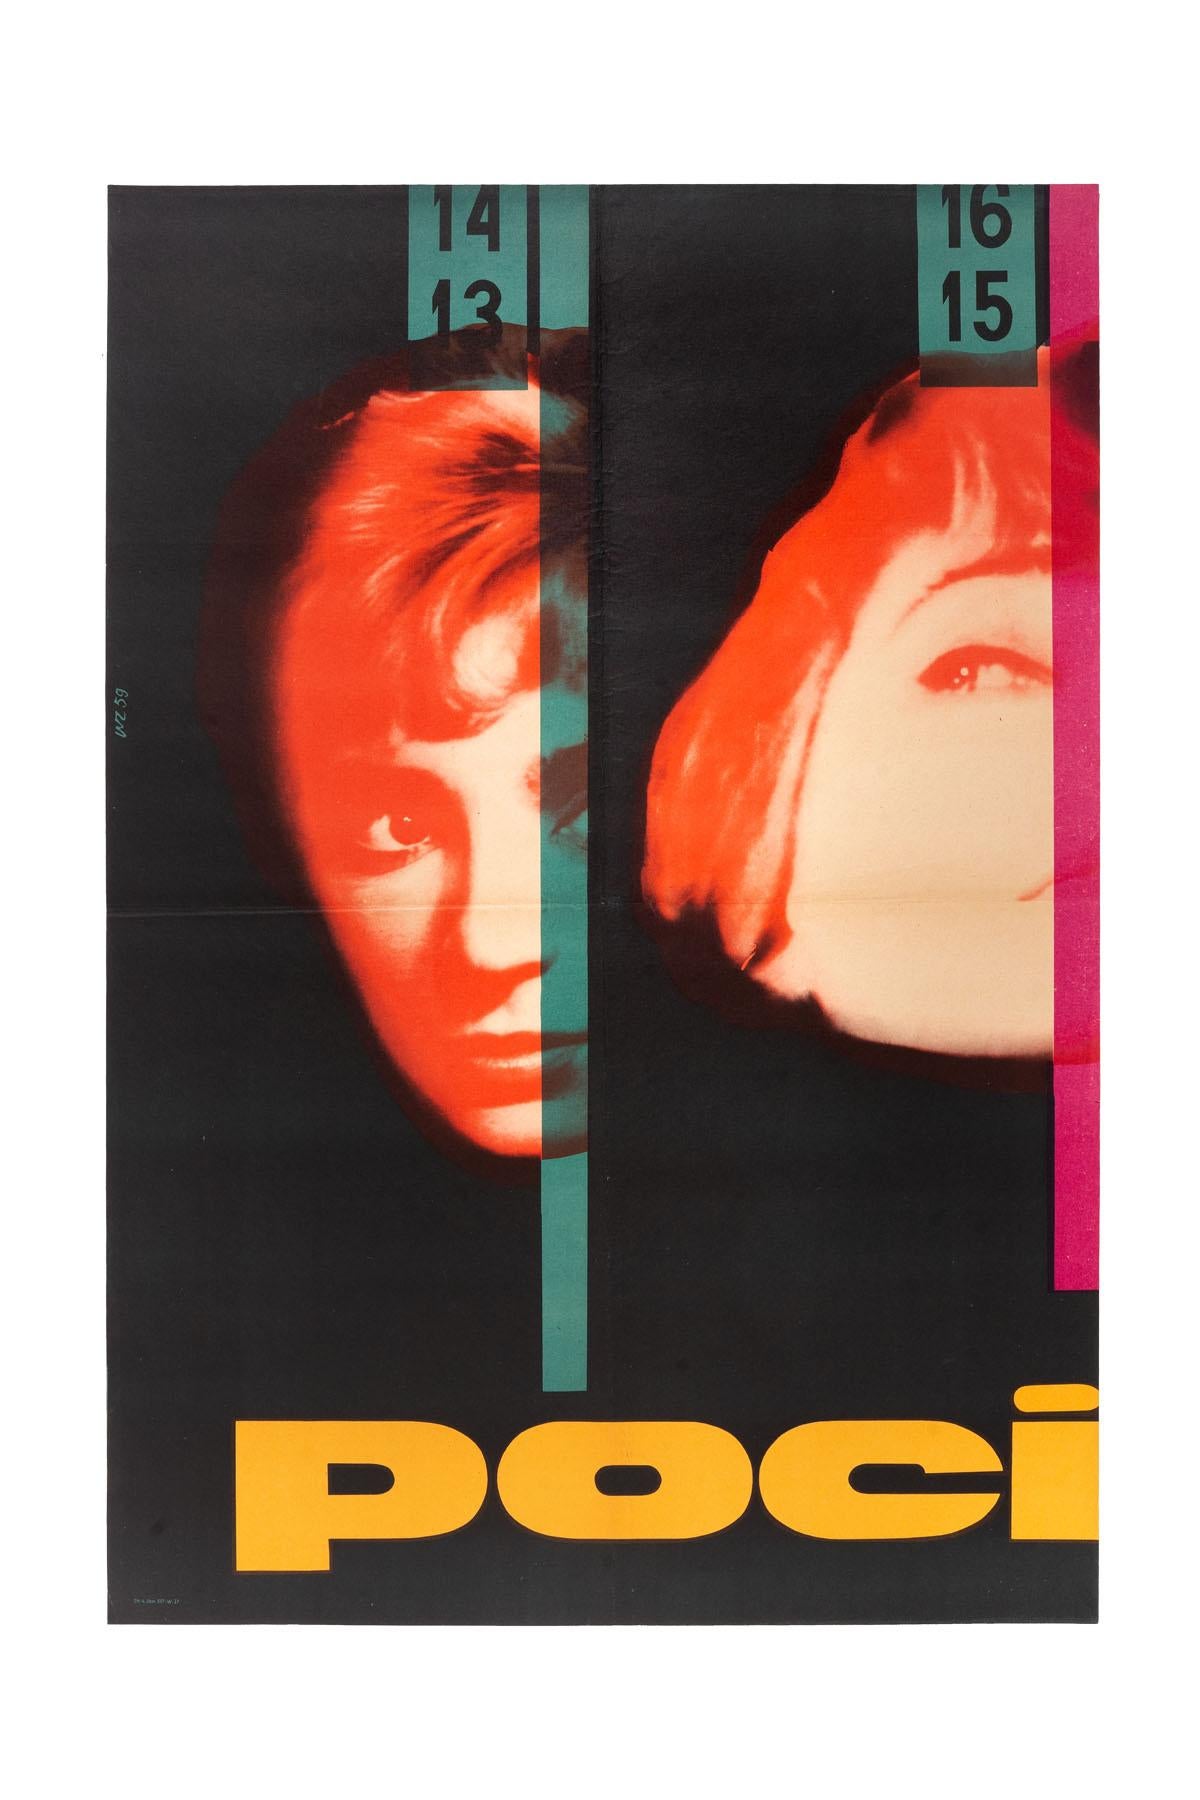 This original Polish Pociag movie poster was designed by Wojciech Zamecznik in 1959.
2-panel poster, 2 x A1 size.

Wojciech Zamecznik (1923-1967), graphic and poster artist, photographer, exhibition designer. 
Zamecznik was among the most